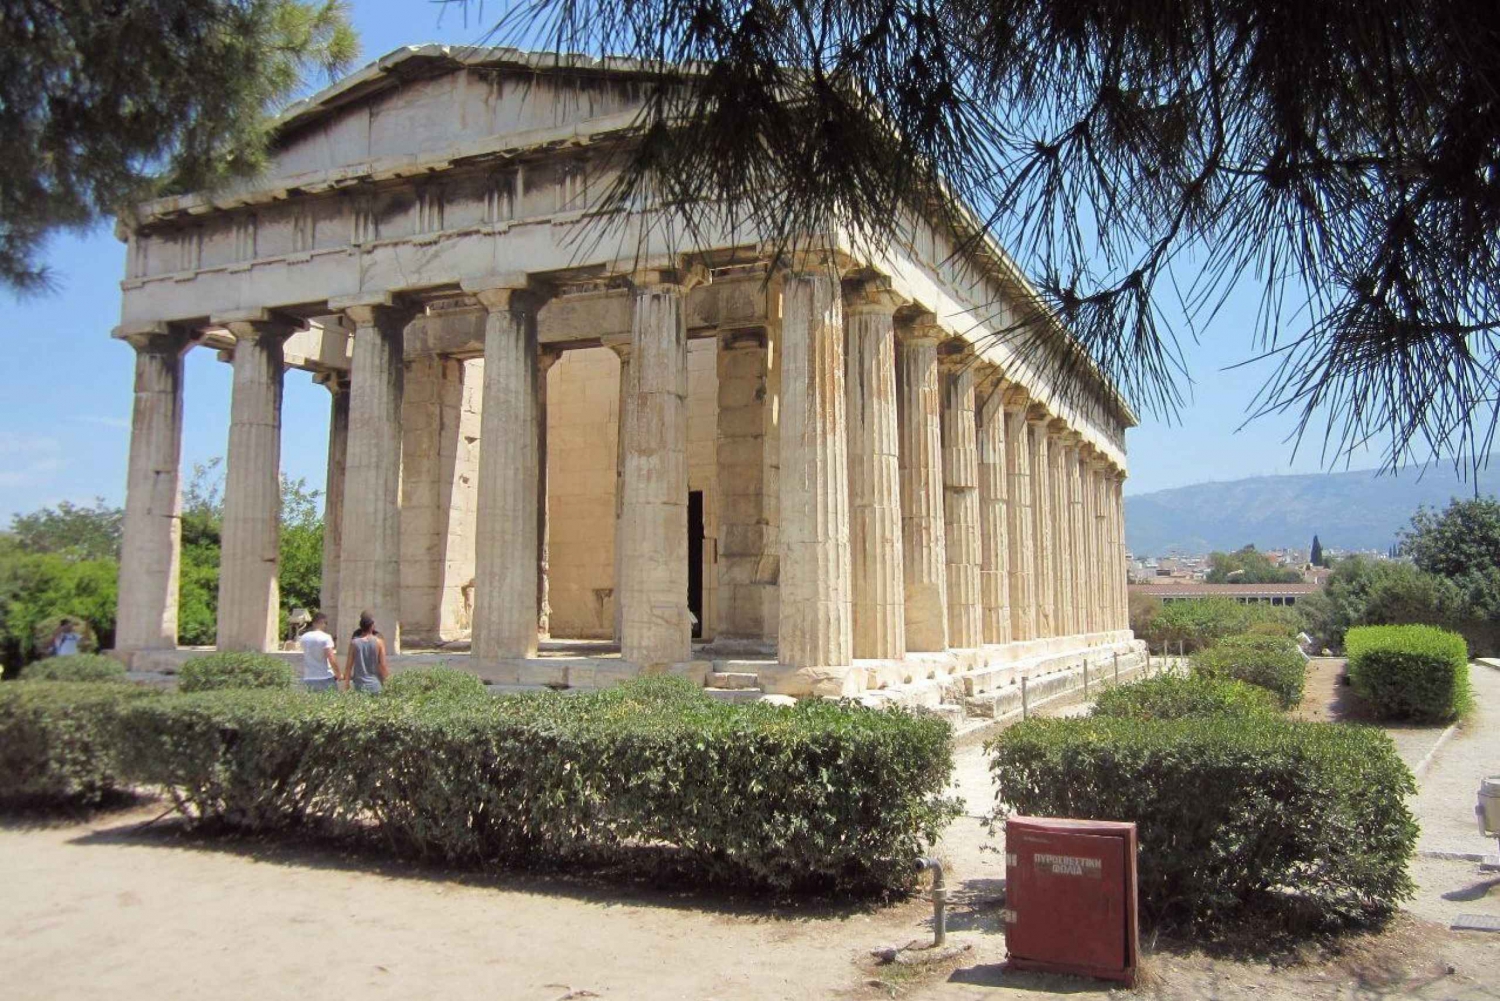 Athen: Audioguide til et eventyr gjennom 11 antikke steder